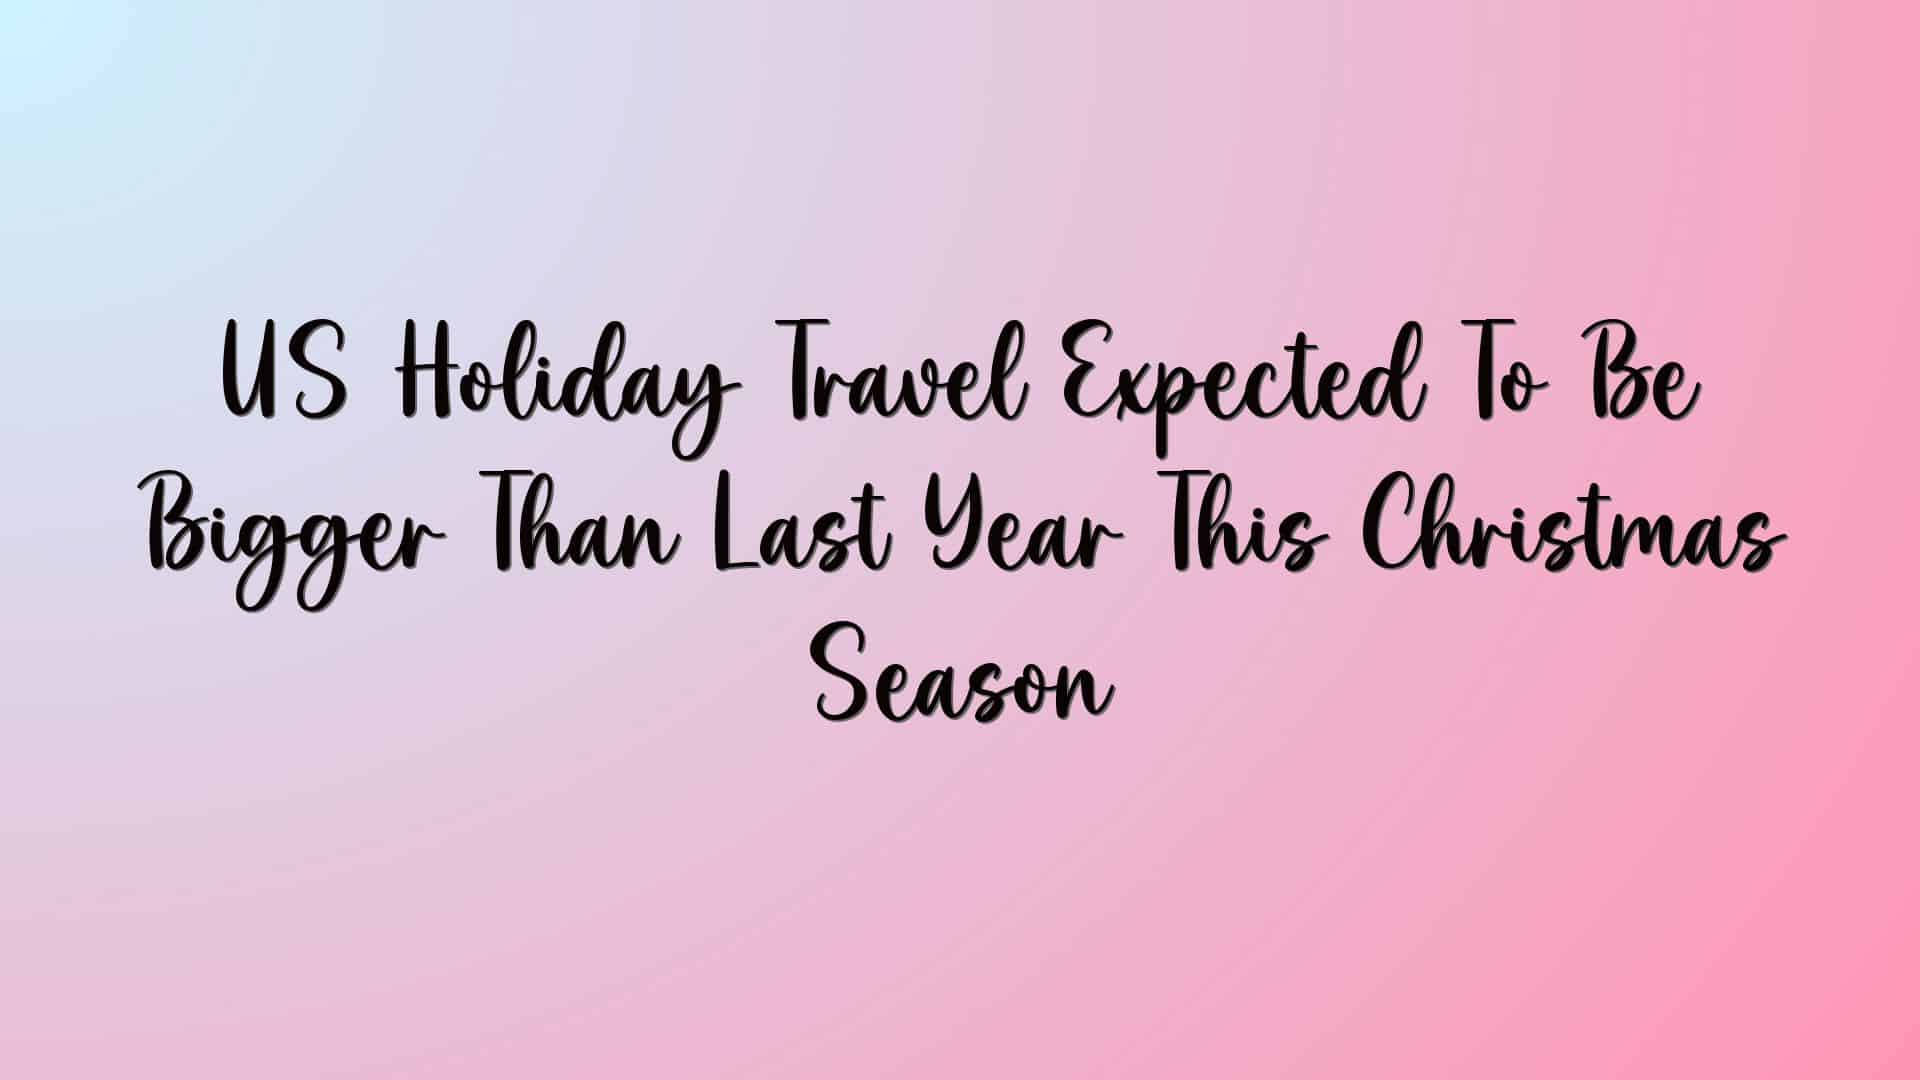 US Holiday Travel Expected To Be Bigger Than Last Year This Christmas Season